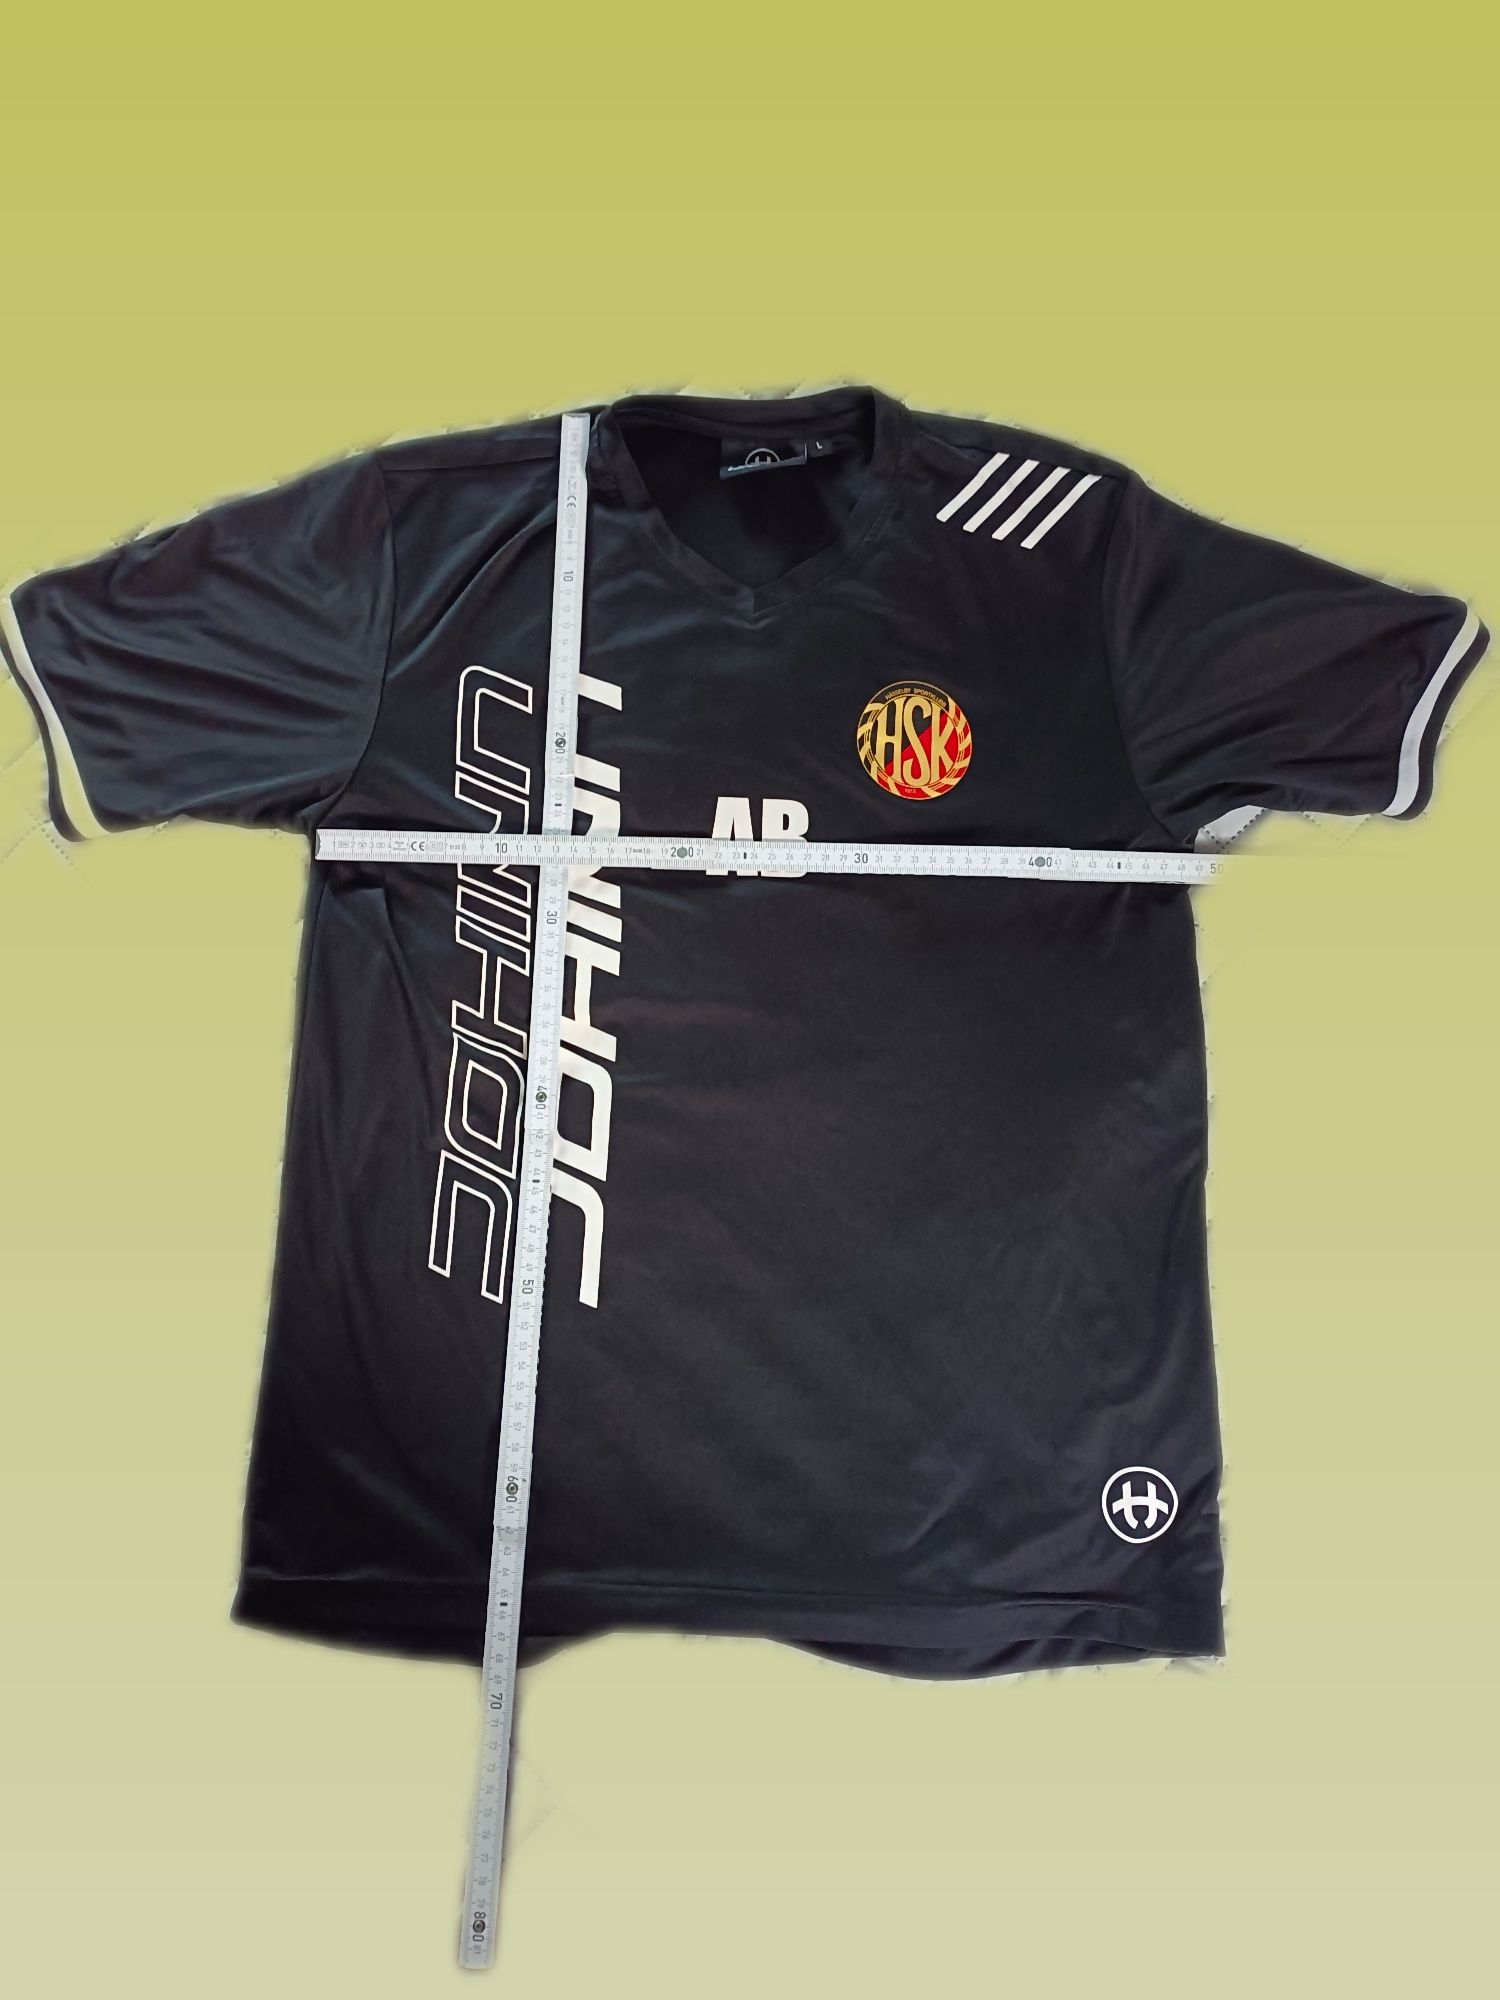 Czarna koszulka Unihock klubu Hasselby Sportklubb